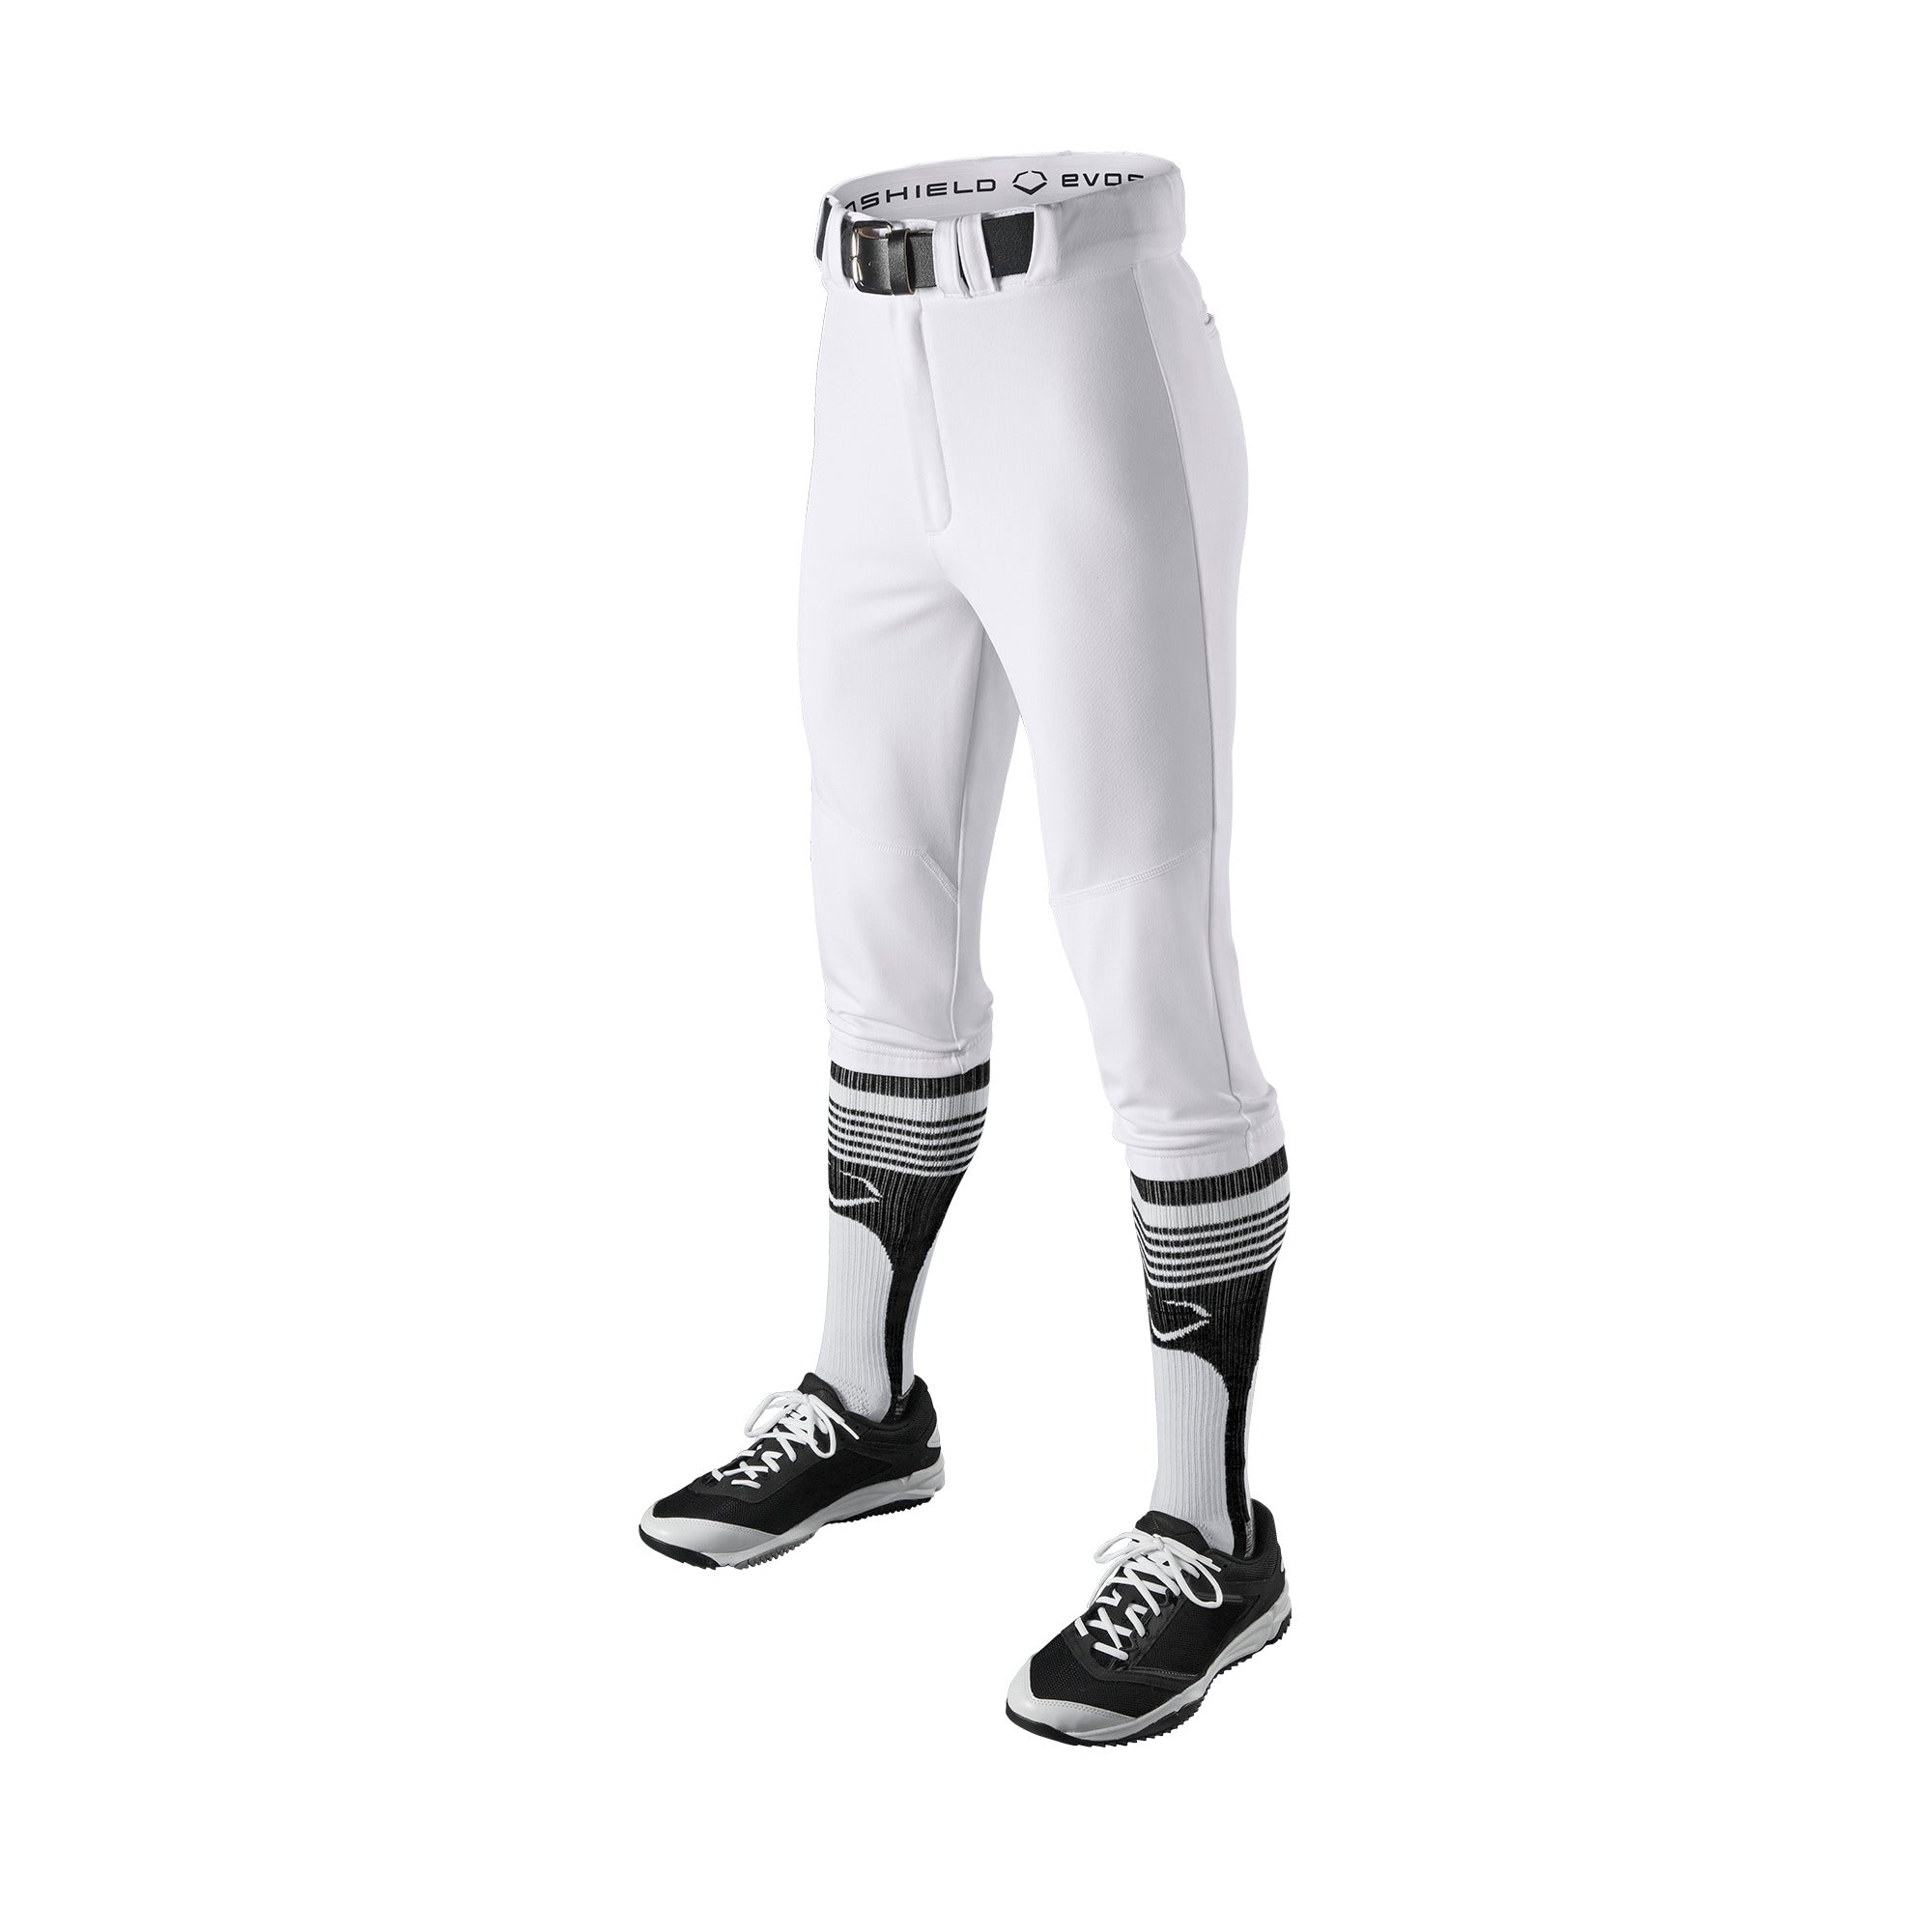 White Baseball Pants & Tights.